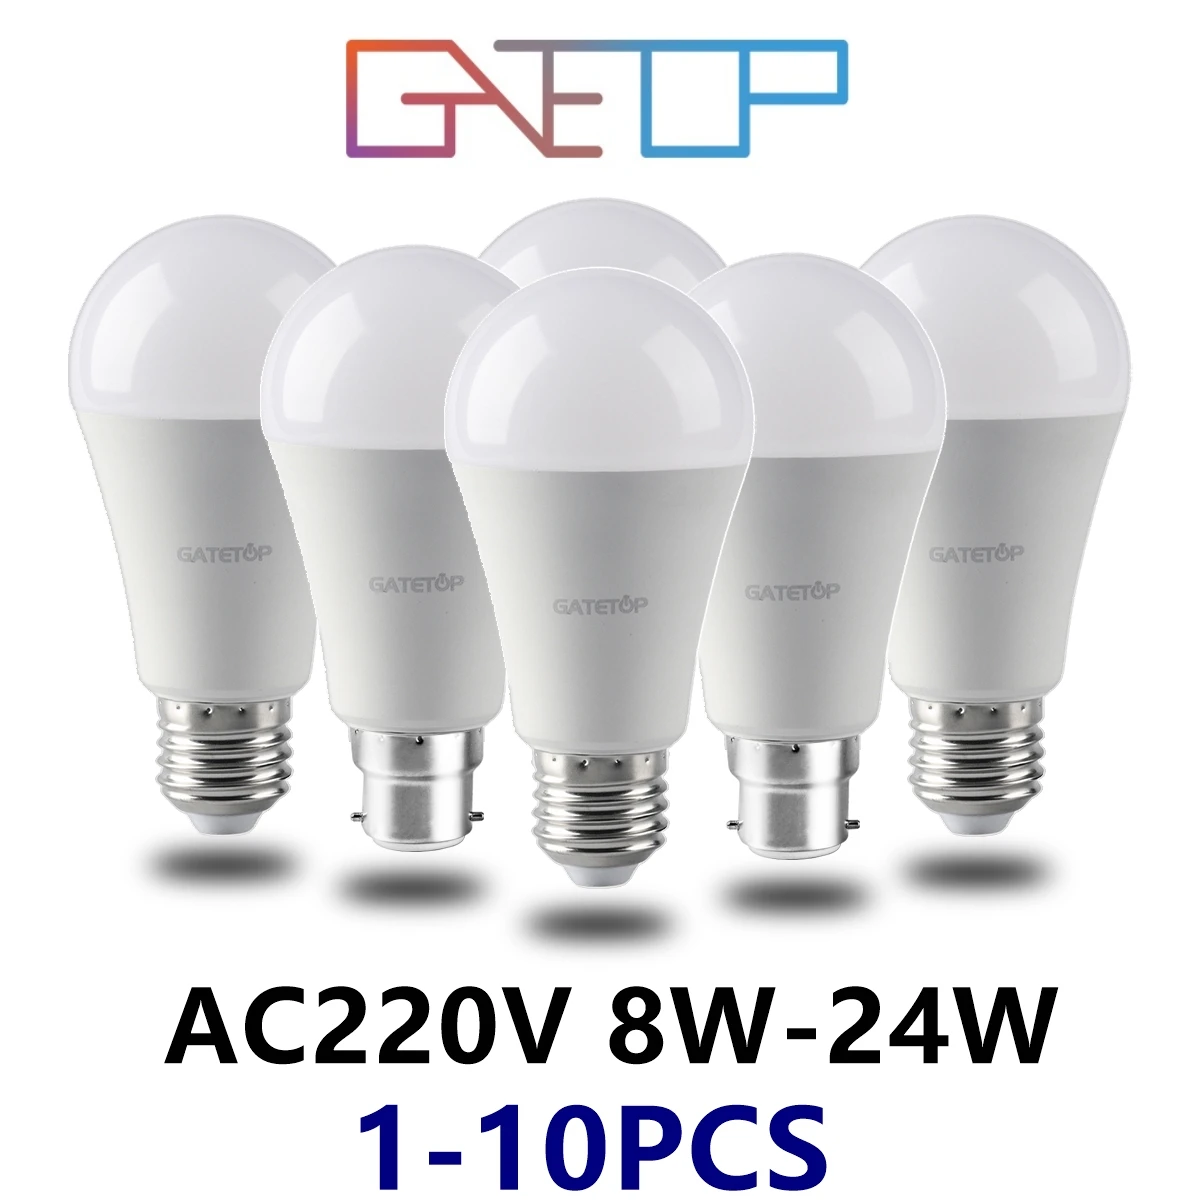 

Led Bulb Lamps Light Real Power 8W-24W 3000K/4000K/6000K E27 B22 AC220V Super Bright Warm White Light Lampada for Home